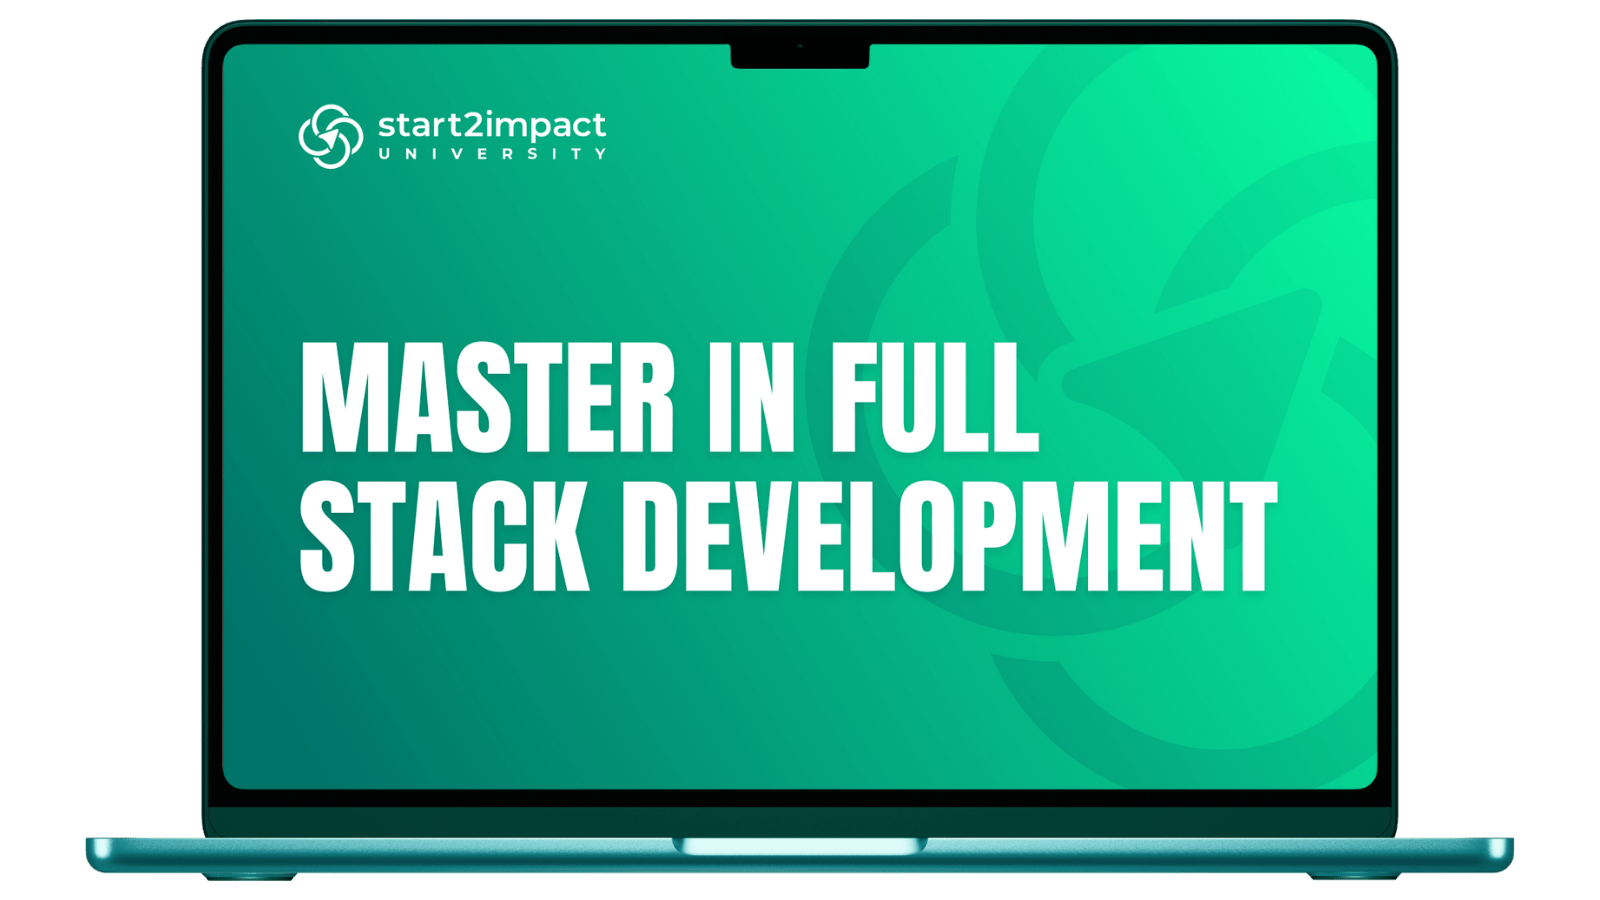 Scarica la brochure del Master in Full Stack Development